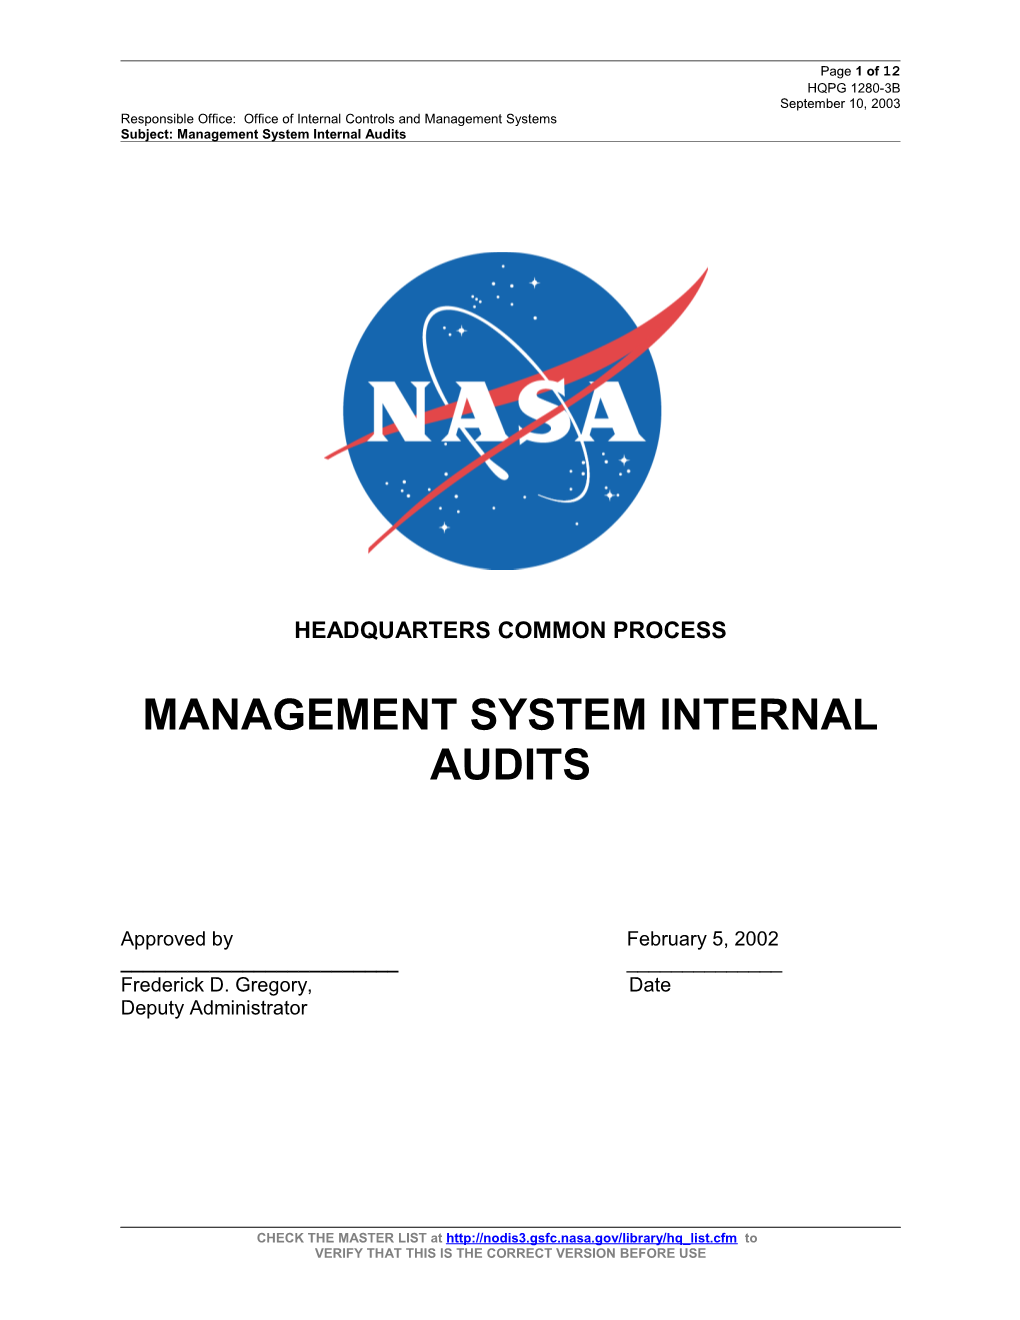 Subject: Management System Internal Audits